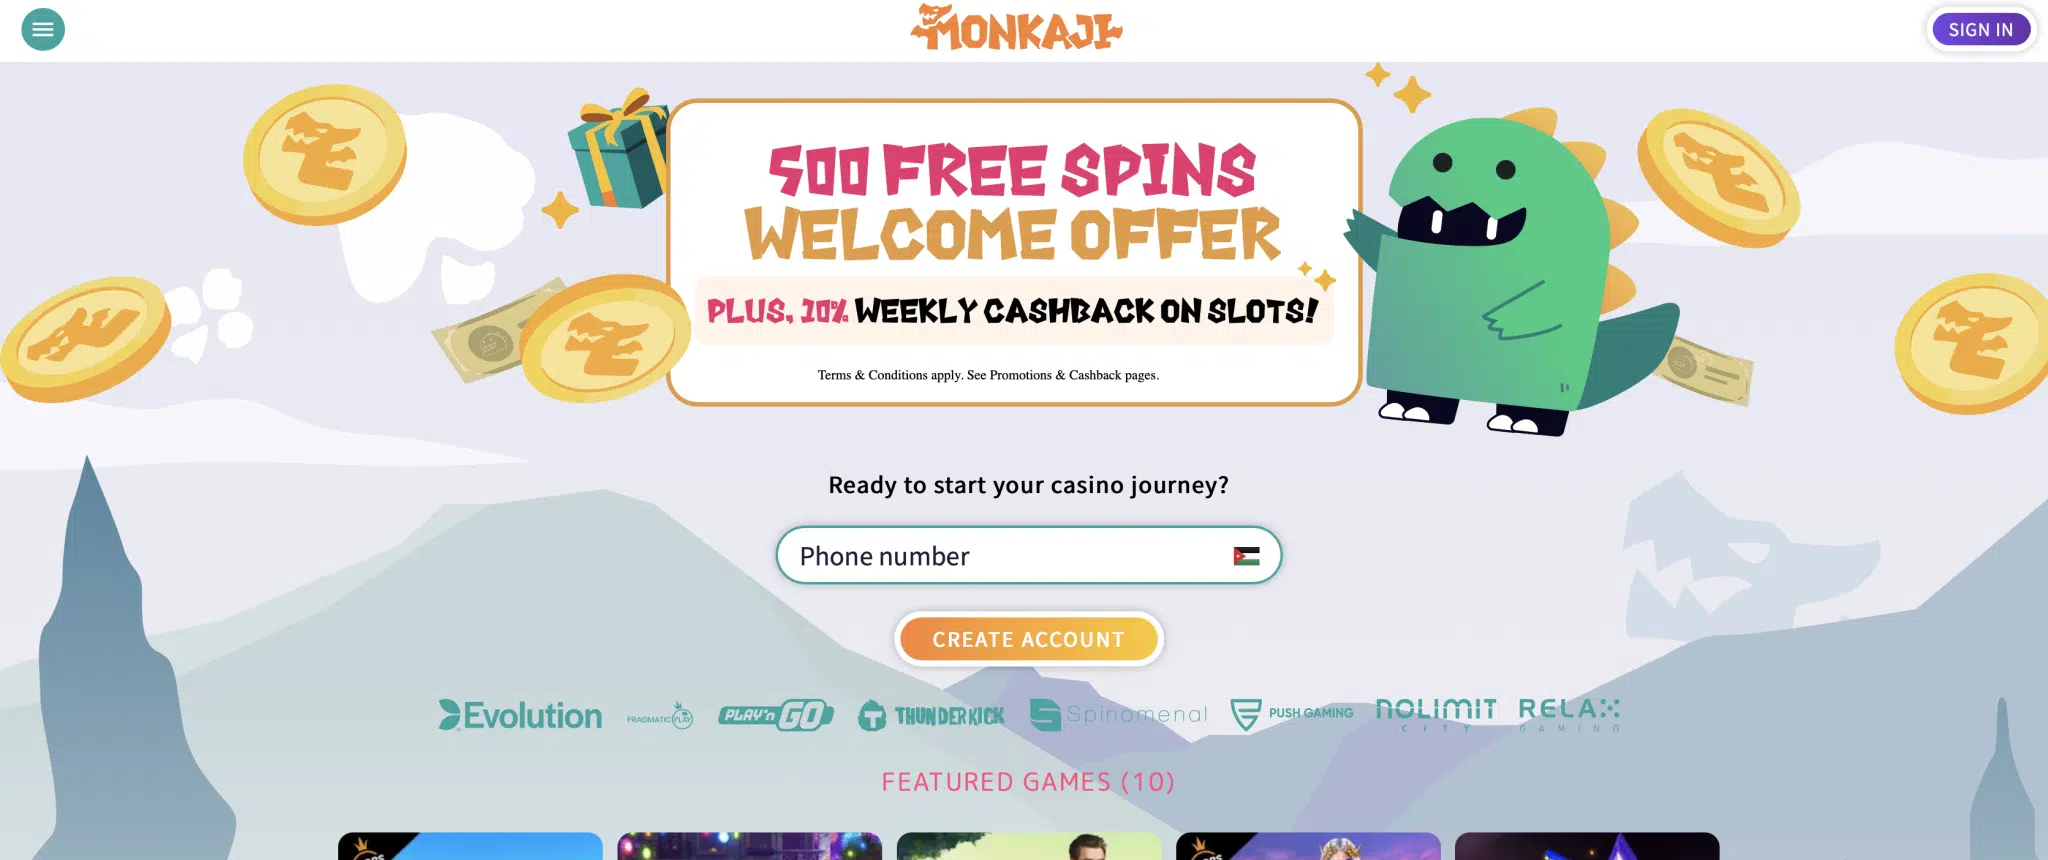 Monkaji casino homepage